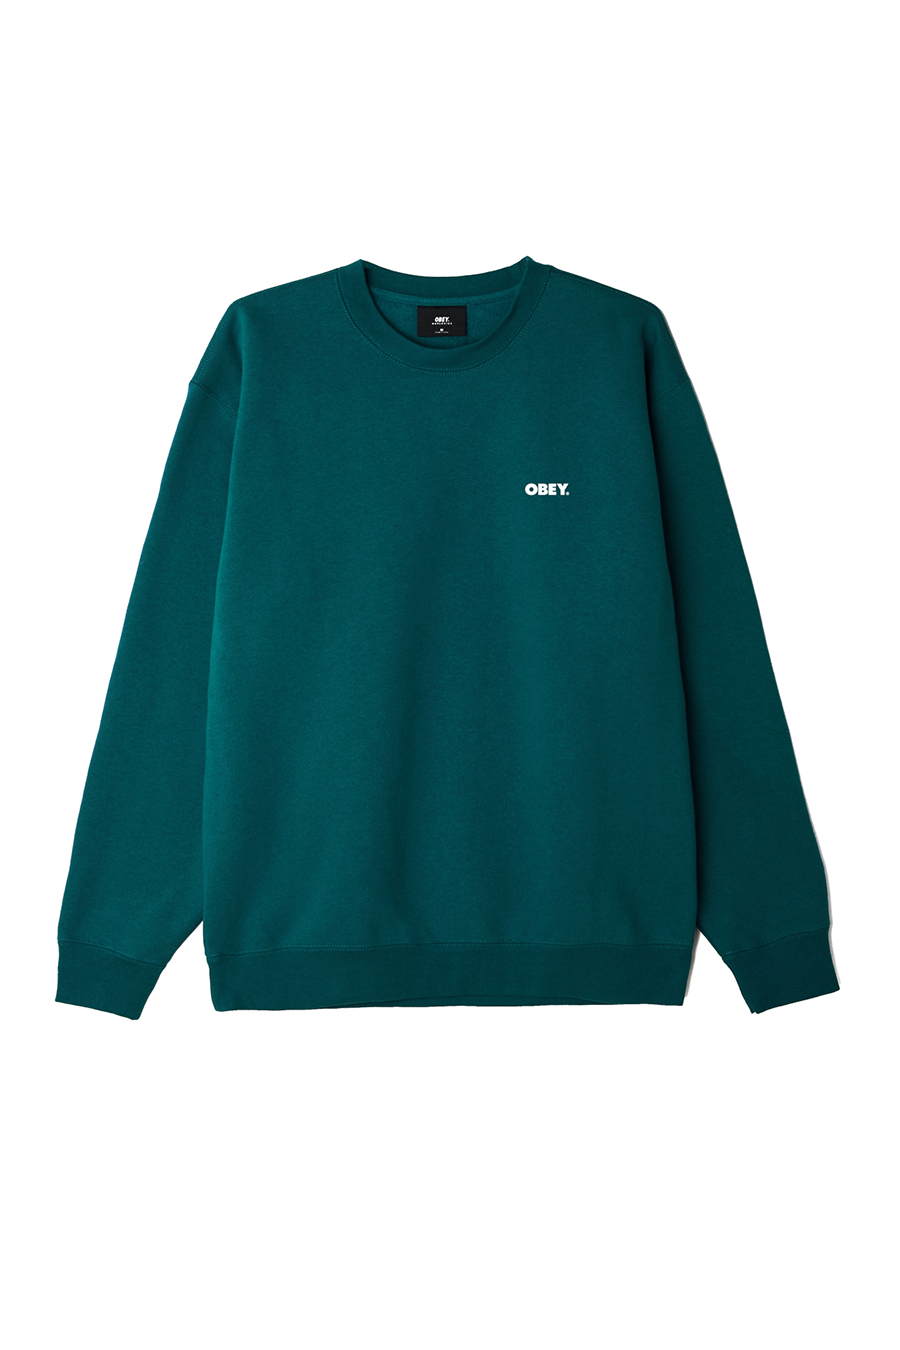 Obey Bold Sweatshirt | Mallard Green - Main Image Number 1 of 2